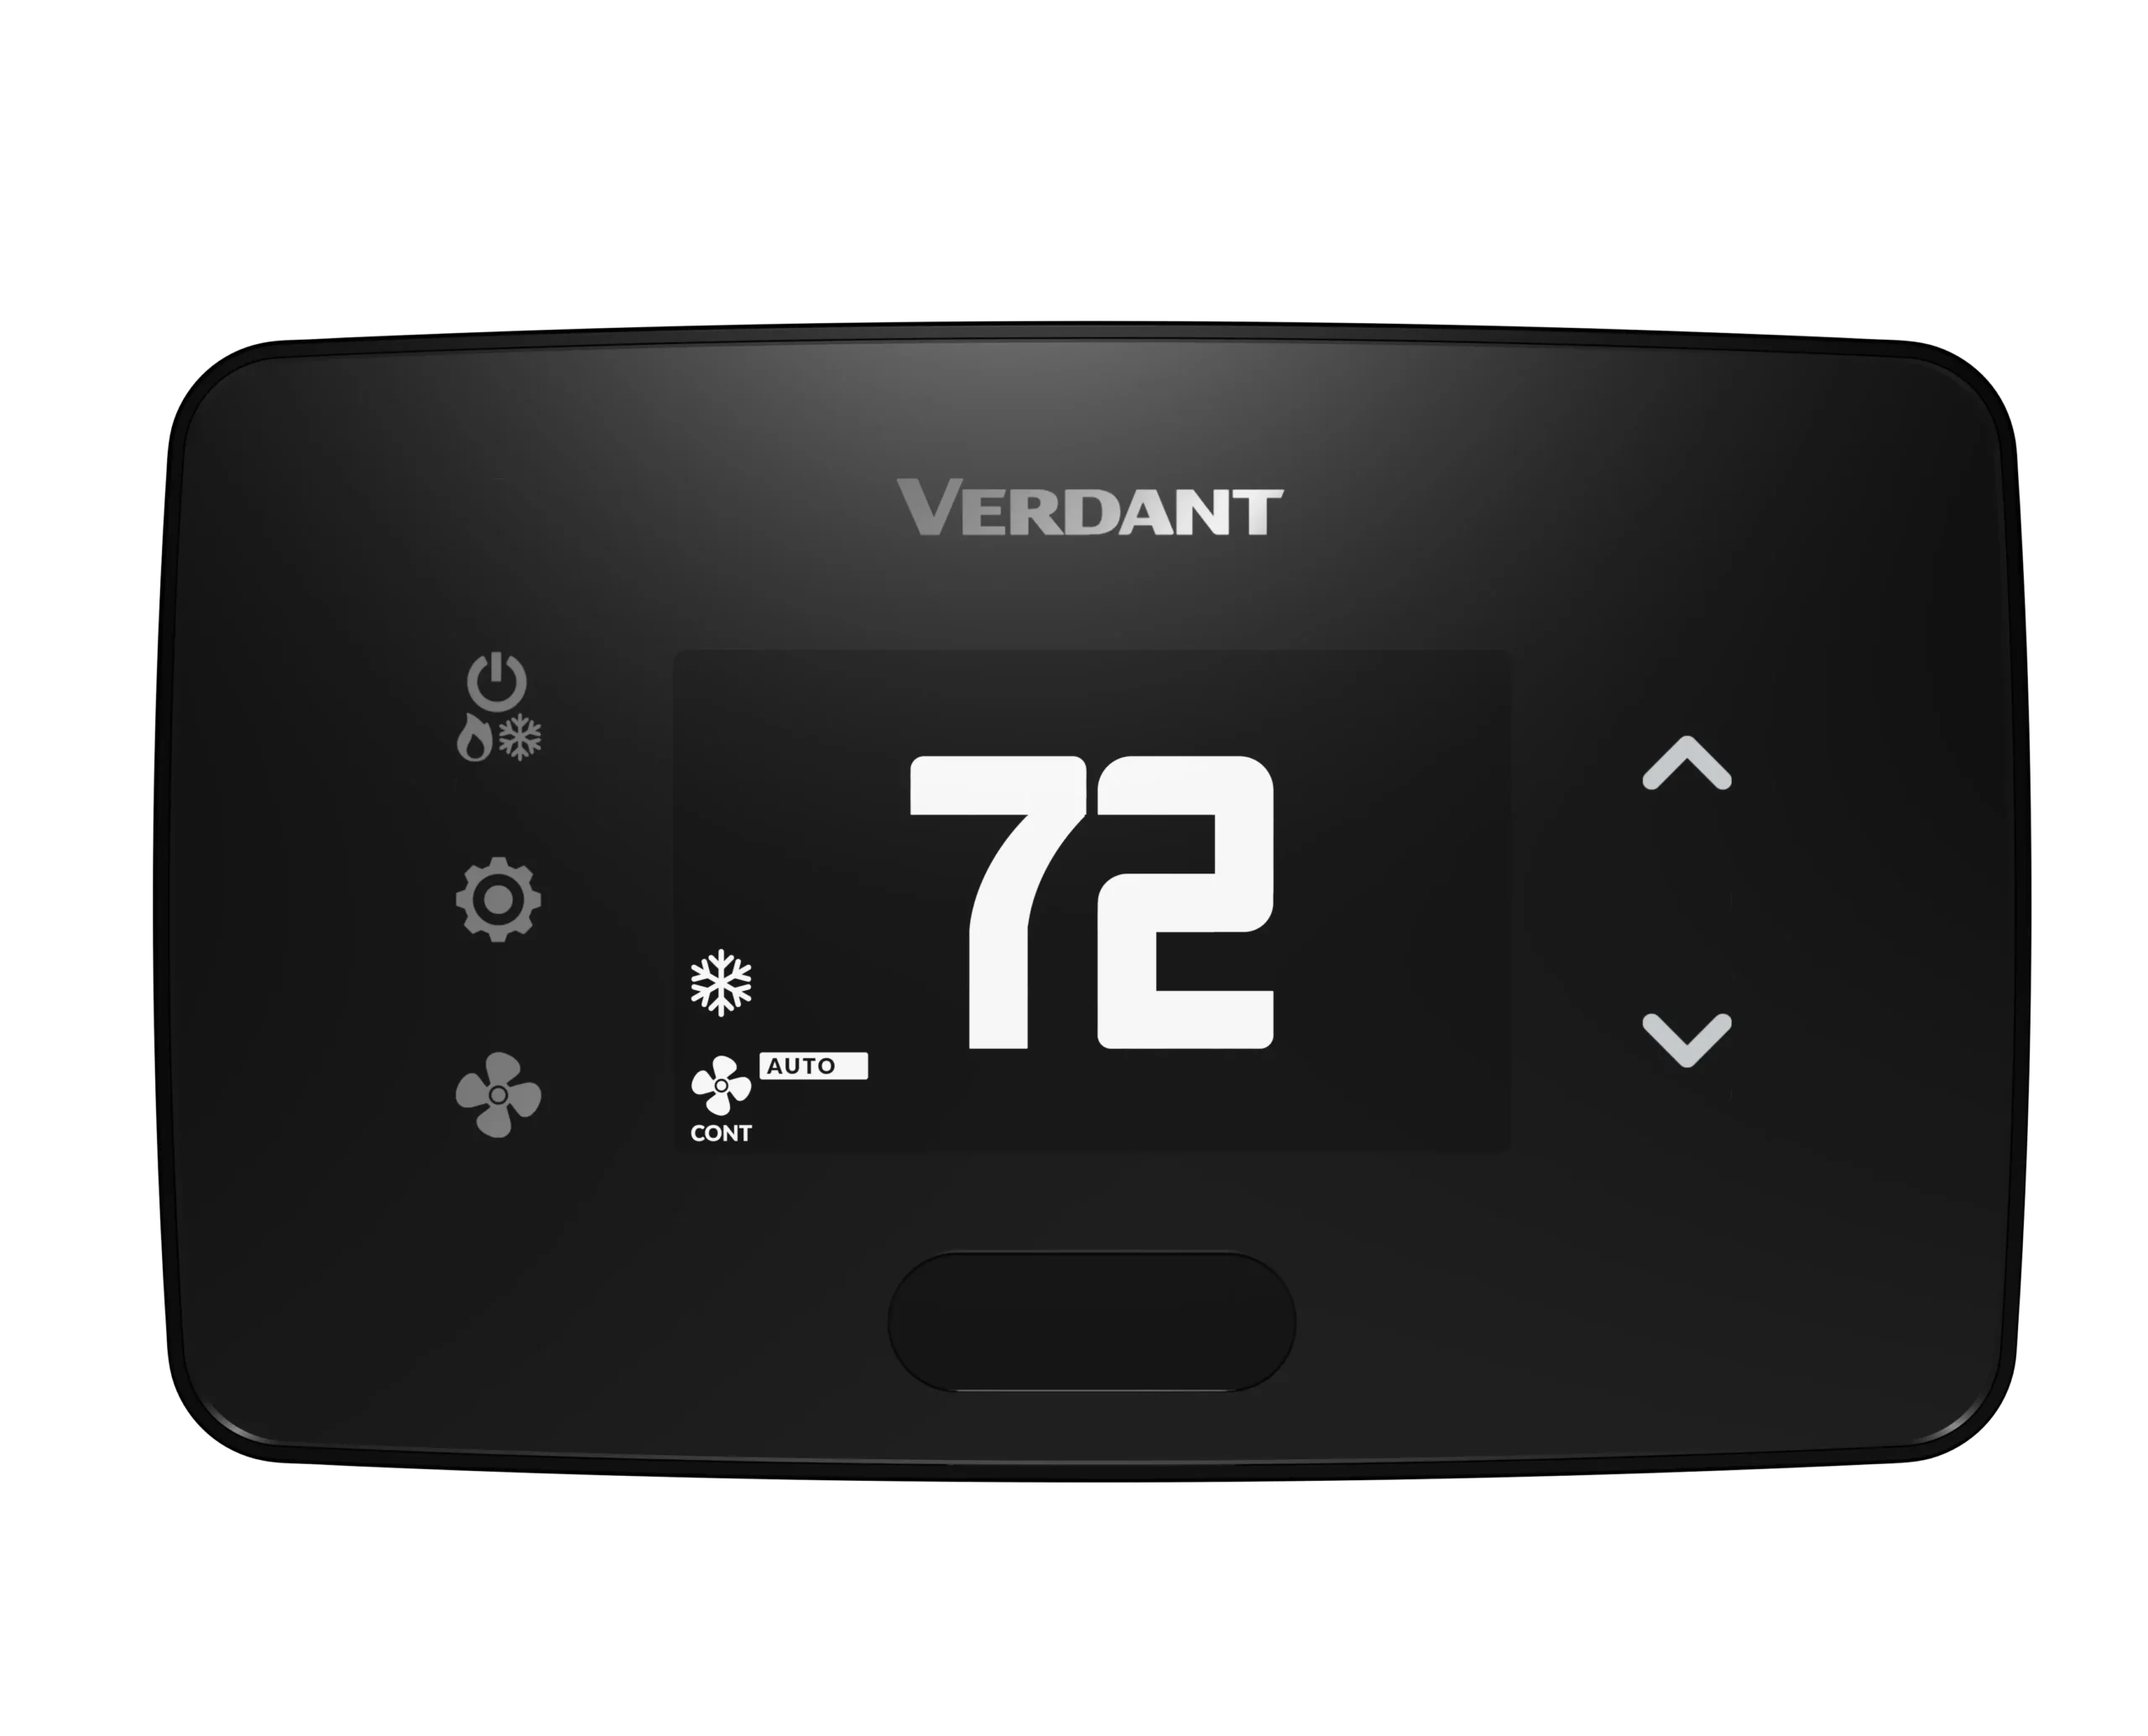 Verdant VX4 energy management thermostat in black